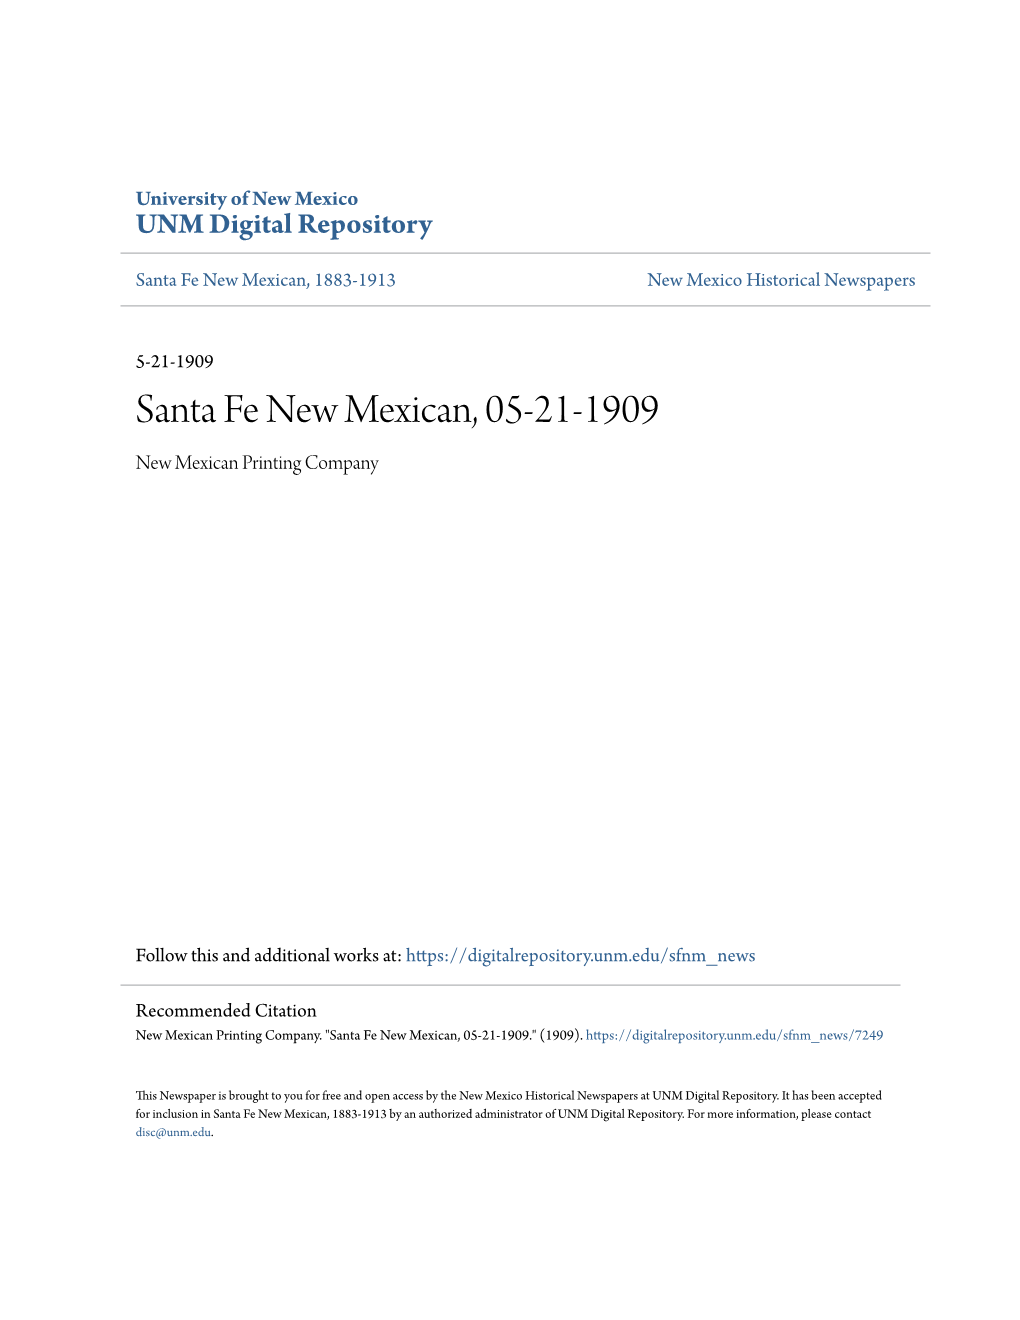 Santa Fe New Mexican, 05-21-1909 New Mexican Printing Company